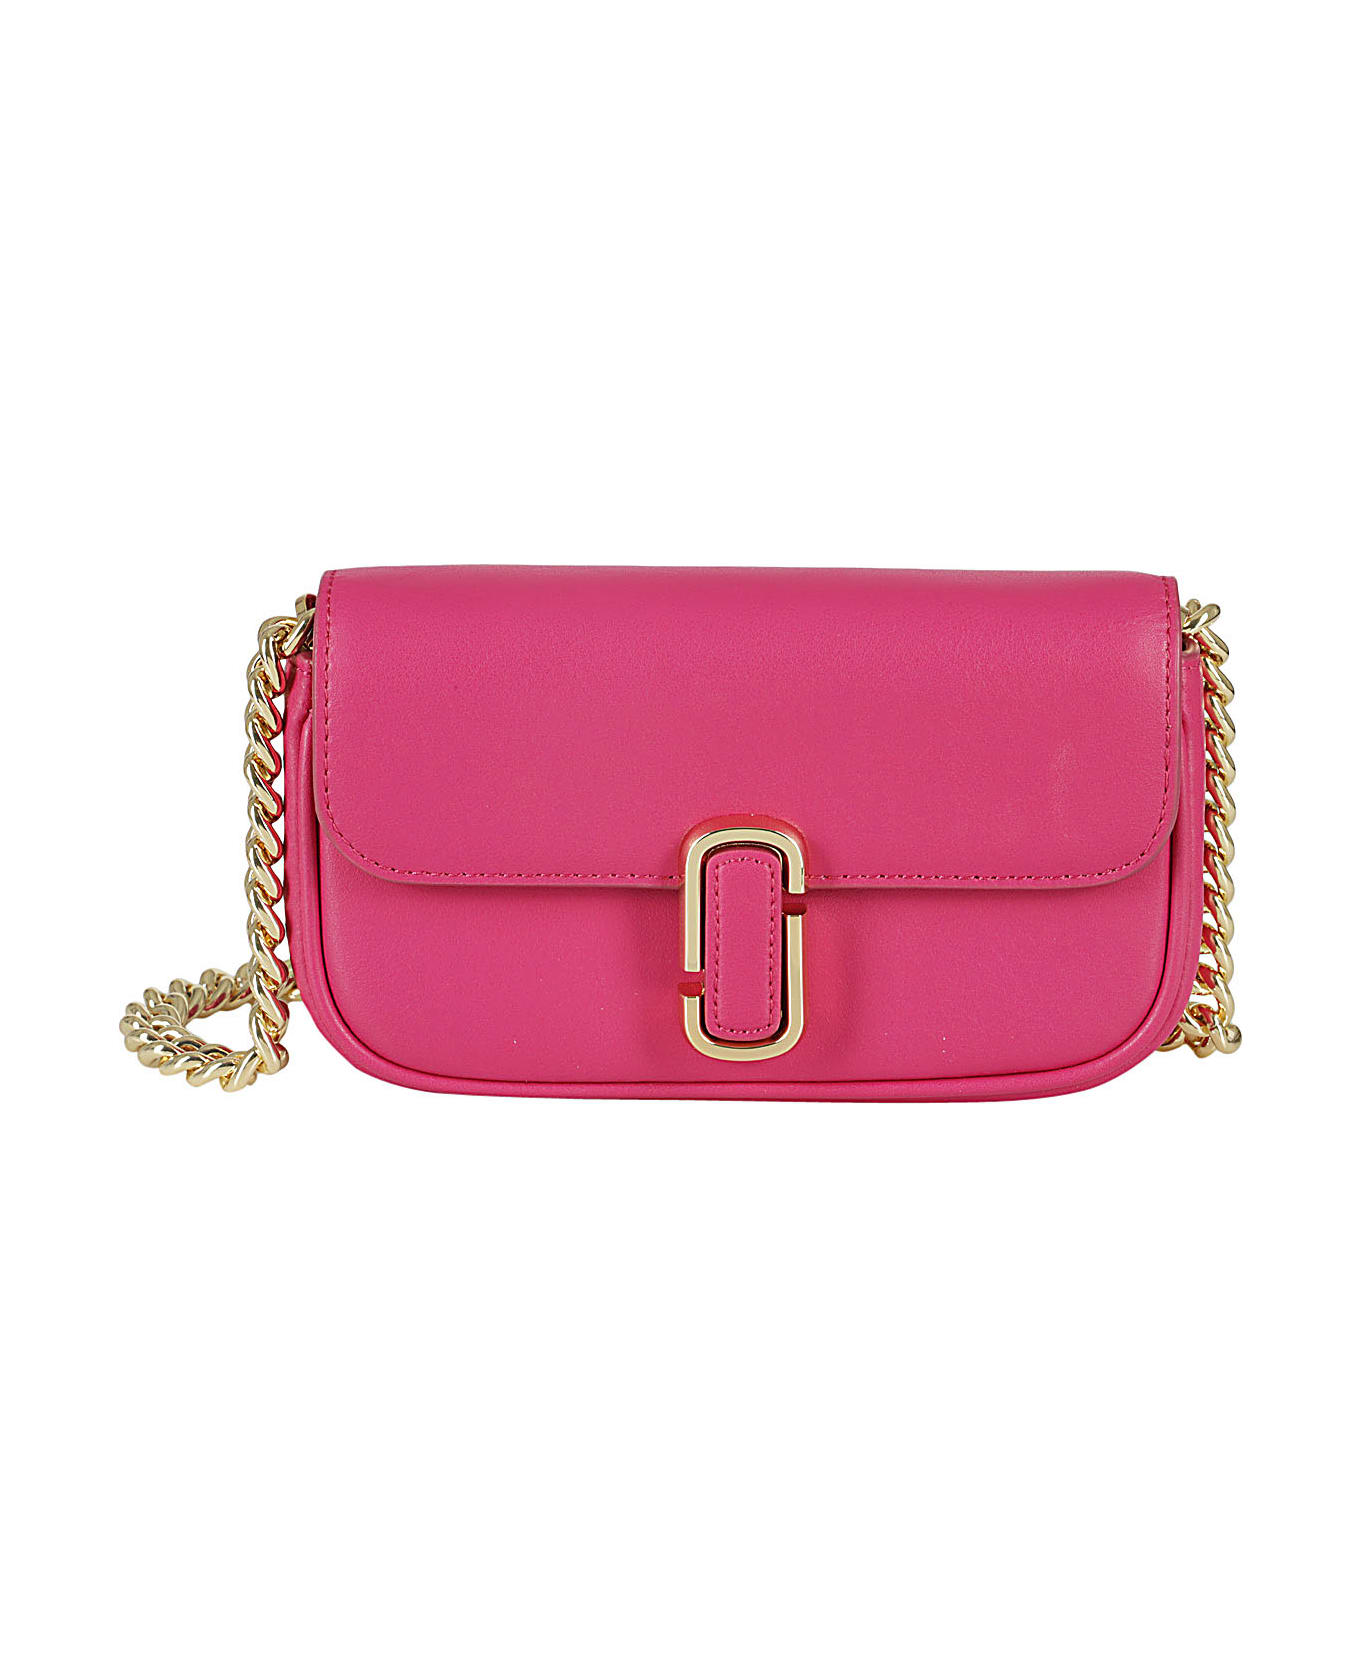 Marc Jacobs The Mini Bag - Lipstick Pink